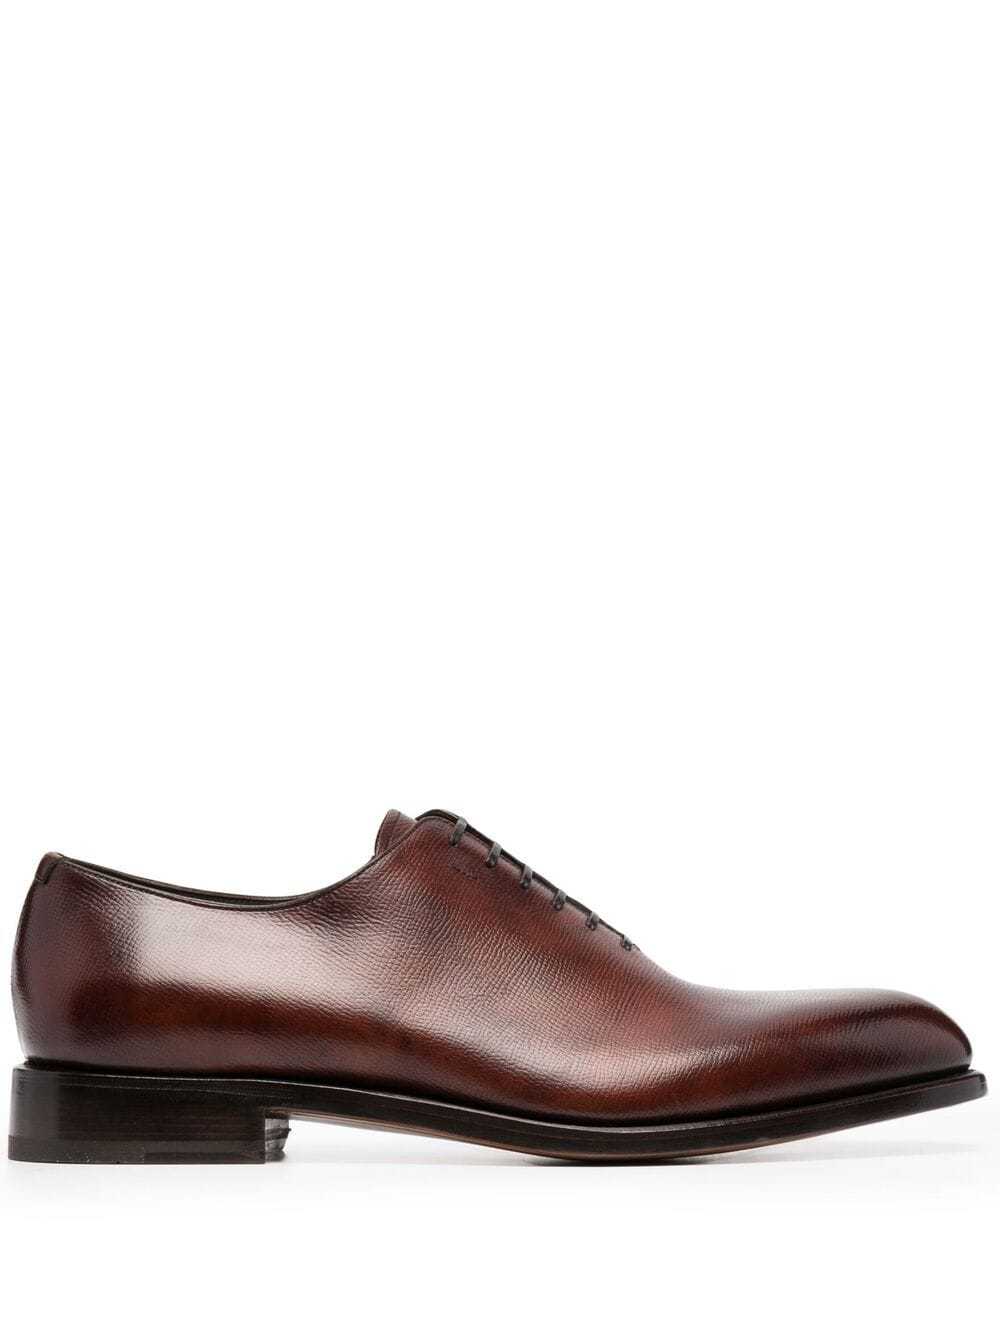 Salvatore Ferragamo Lace Up Oxford Shoes, $716 | farfetch.com | Lookastic